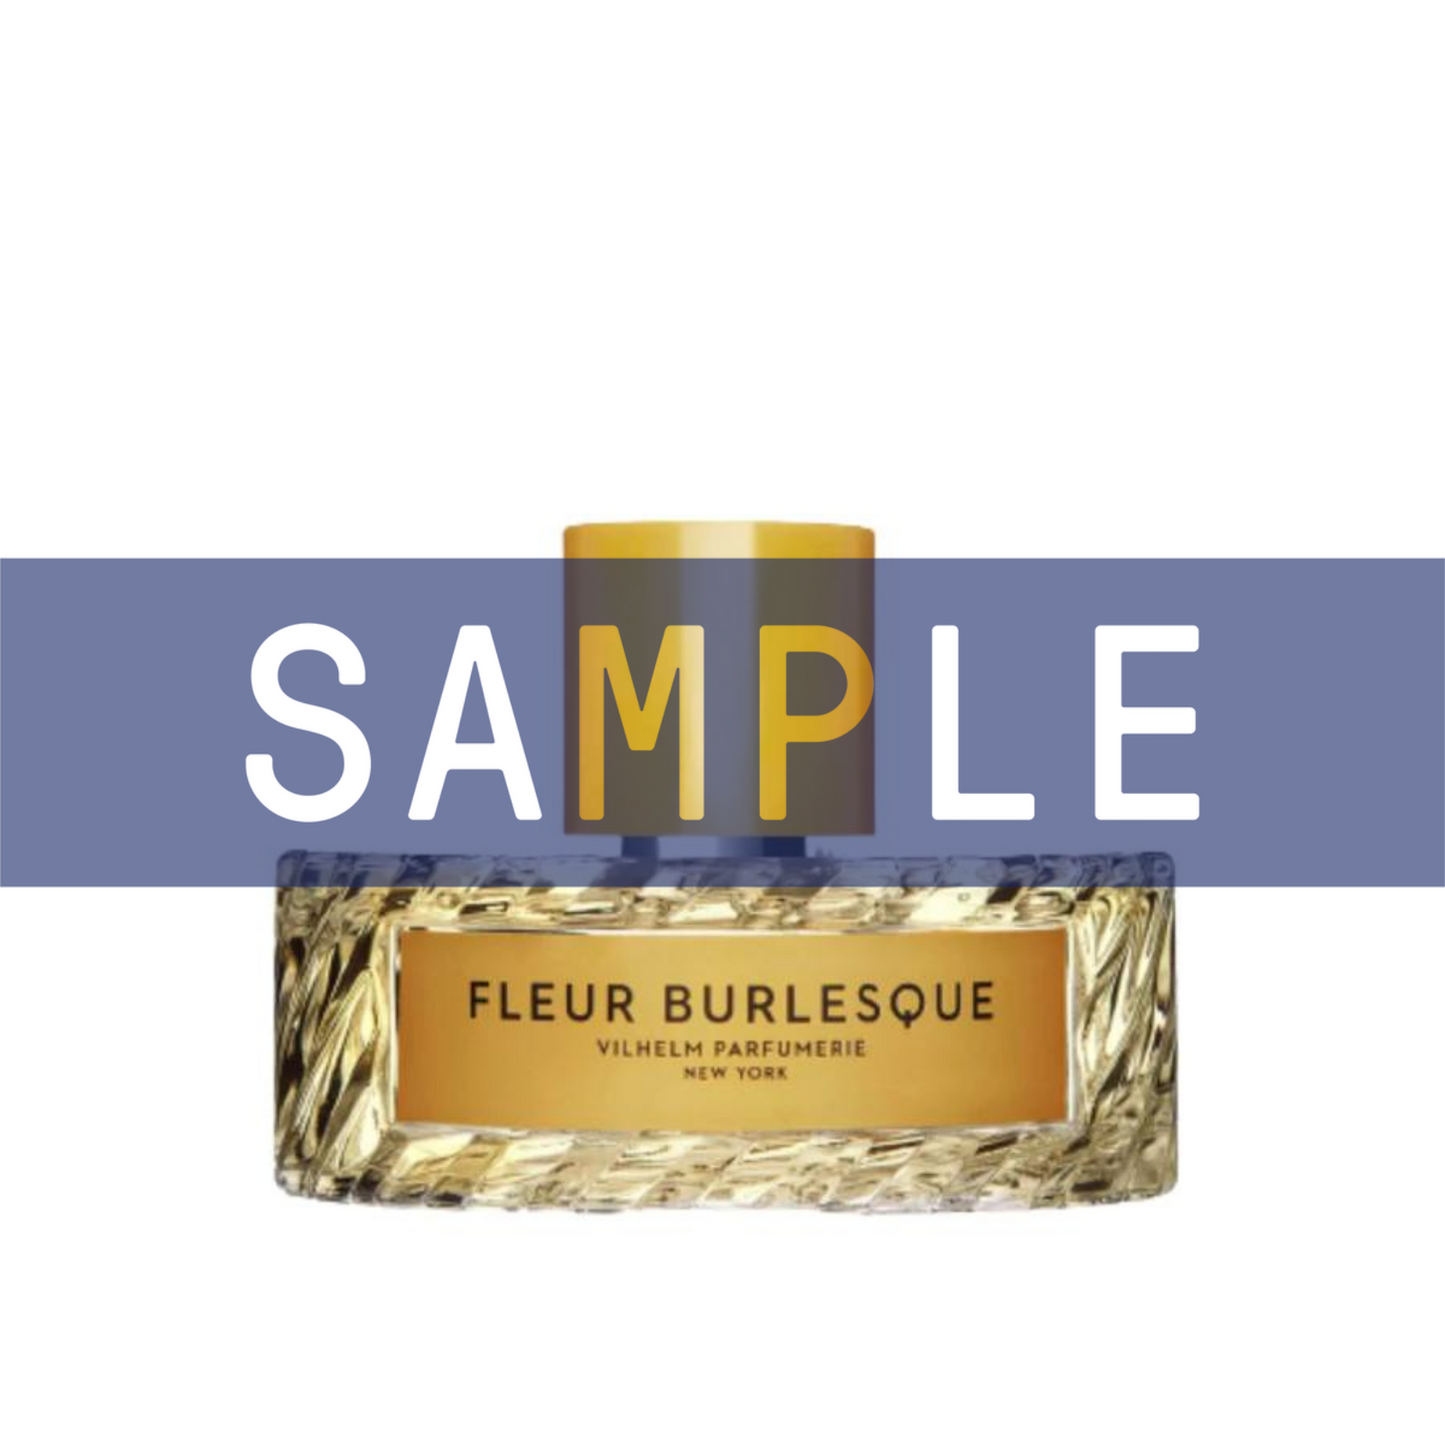 Primary Image of Vilhelm Parfumerie Sample - Fleur Burlesque EDP 